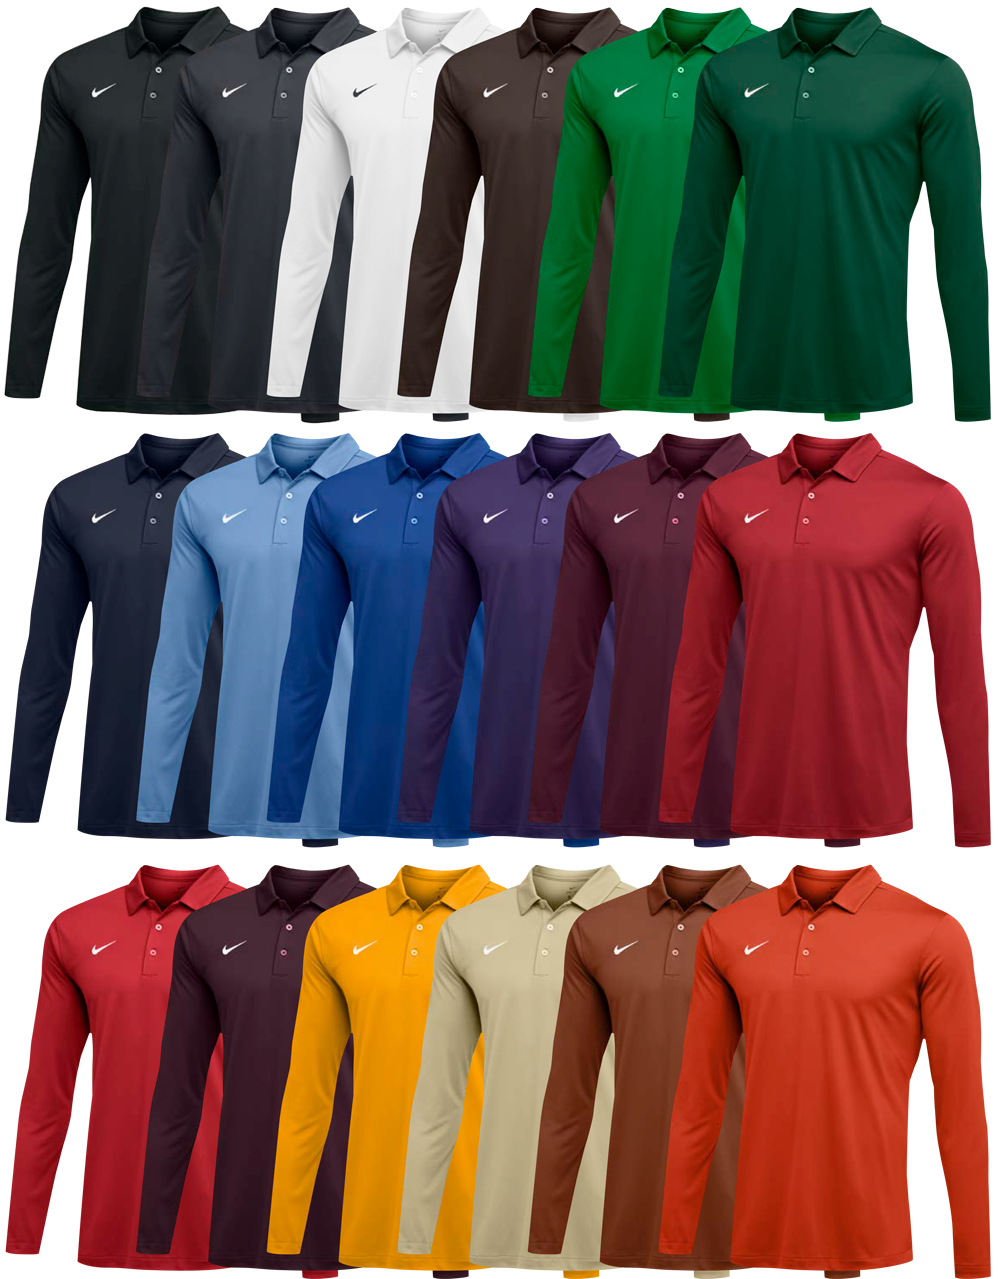 Nike Polo Shirts Color Variety